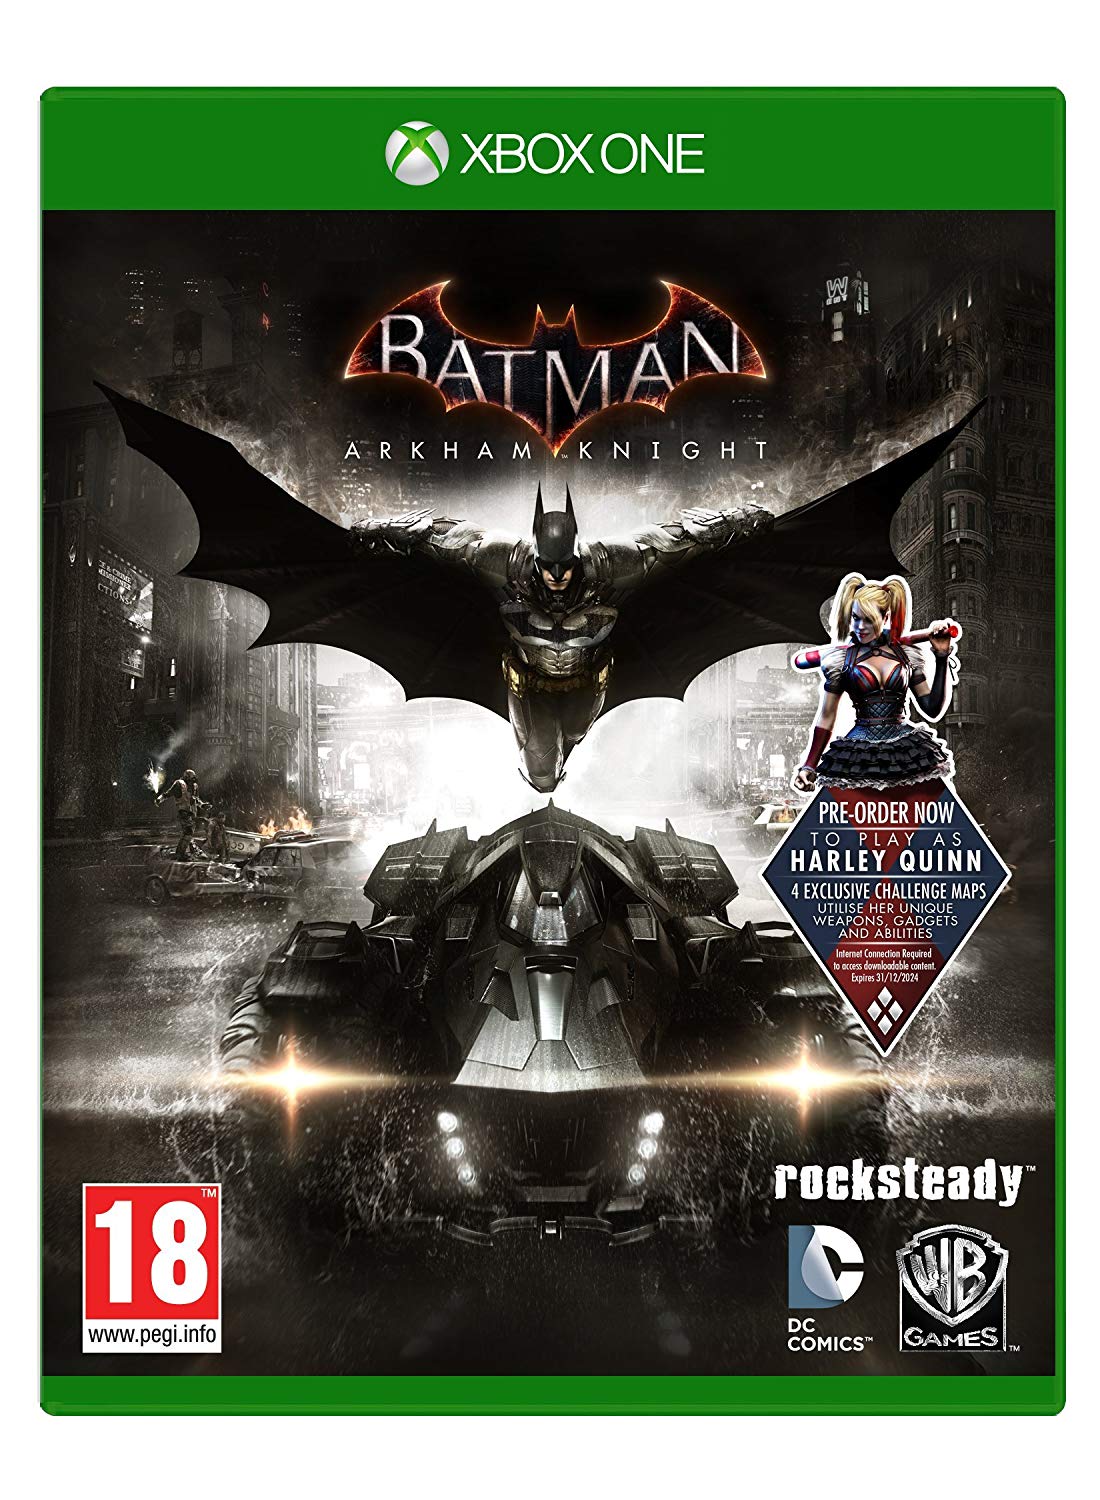 Batman: Arkham Knight Premium Edition Digital Download Key (Xbox One): GLOBAL (works worldwide)